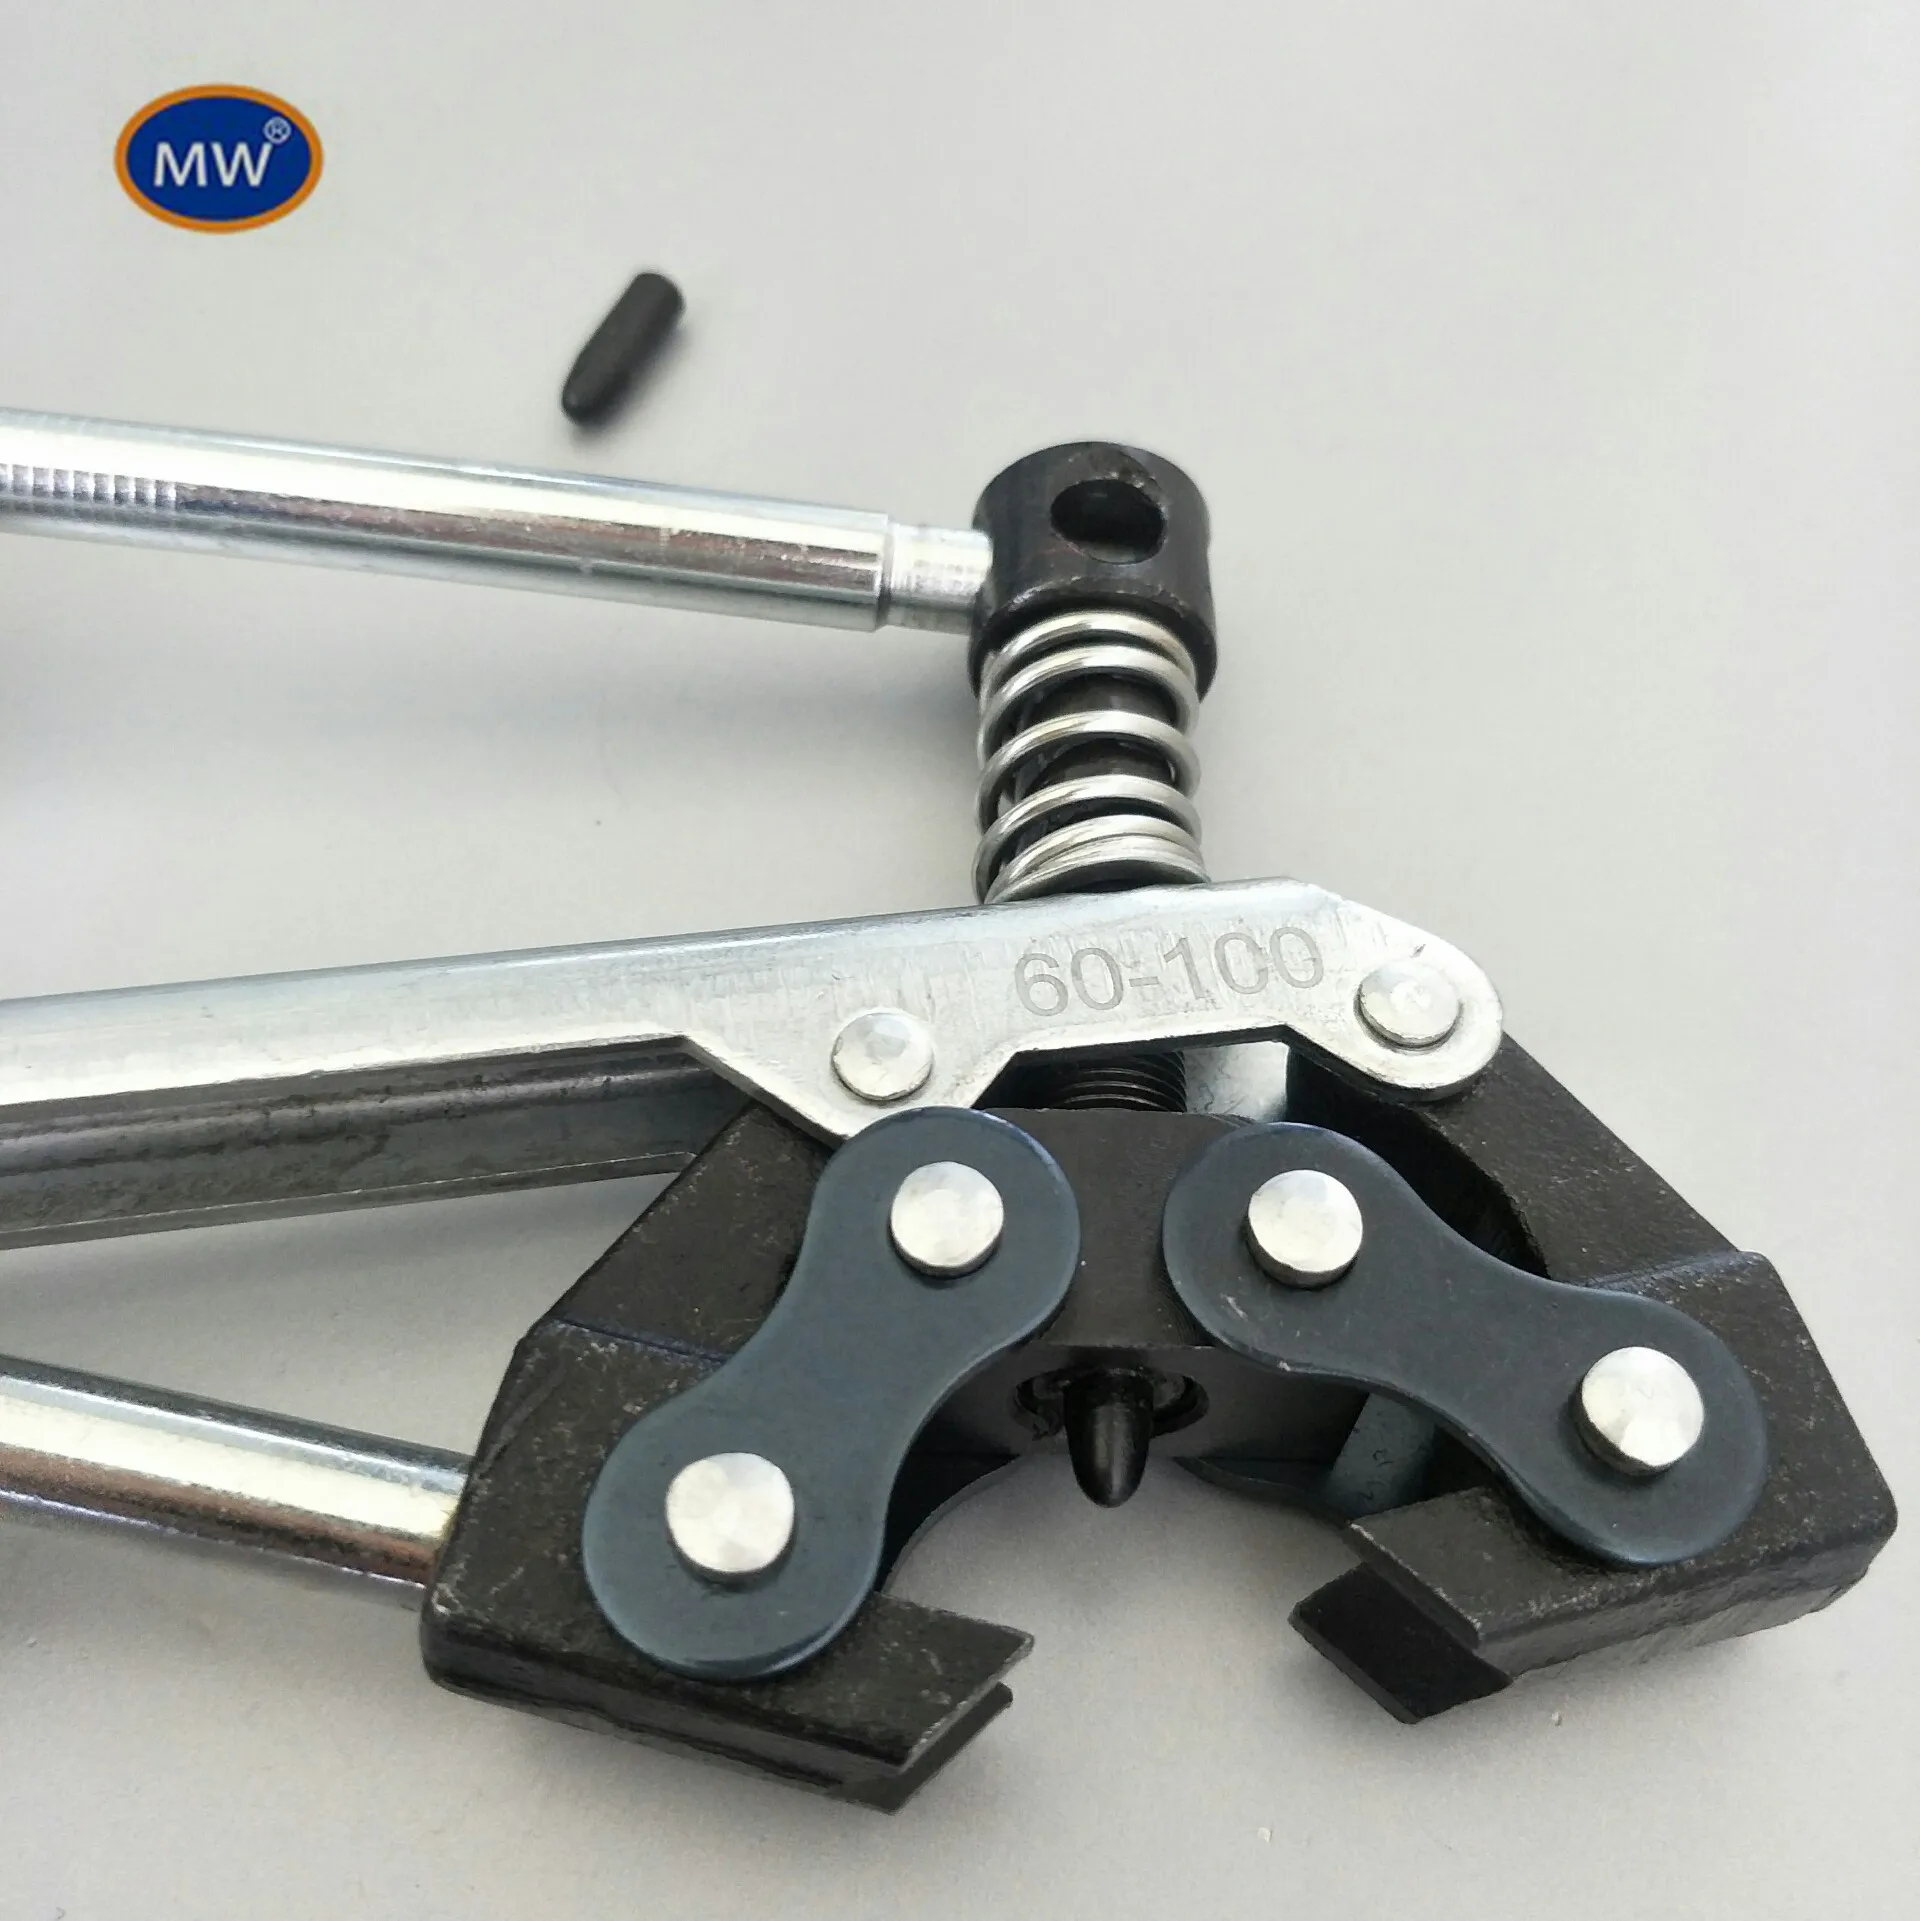 Breaker and Riveting Tool AT406 Chain Splitter 